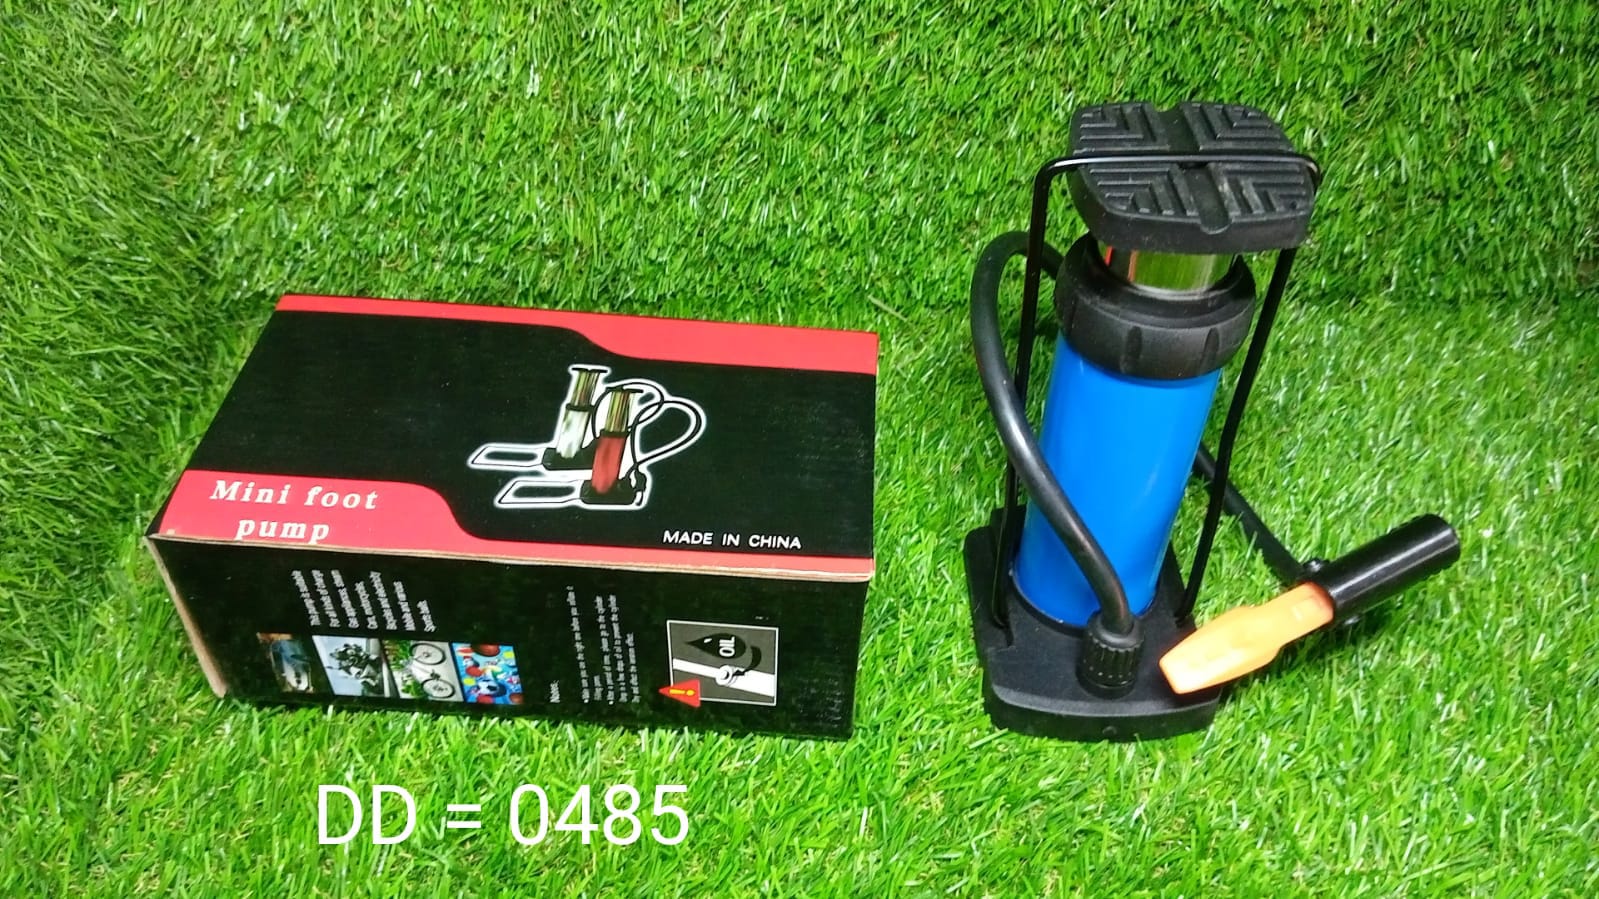 0485 Portable Mini Foot Pump for Bicycle ,Bike and car DeoDap